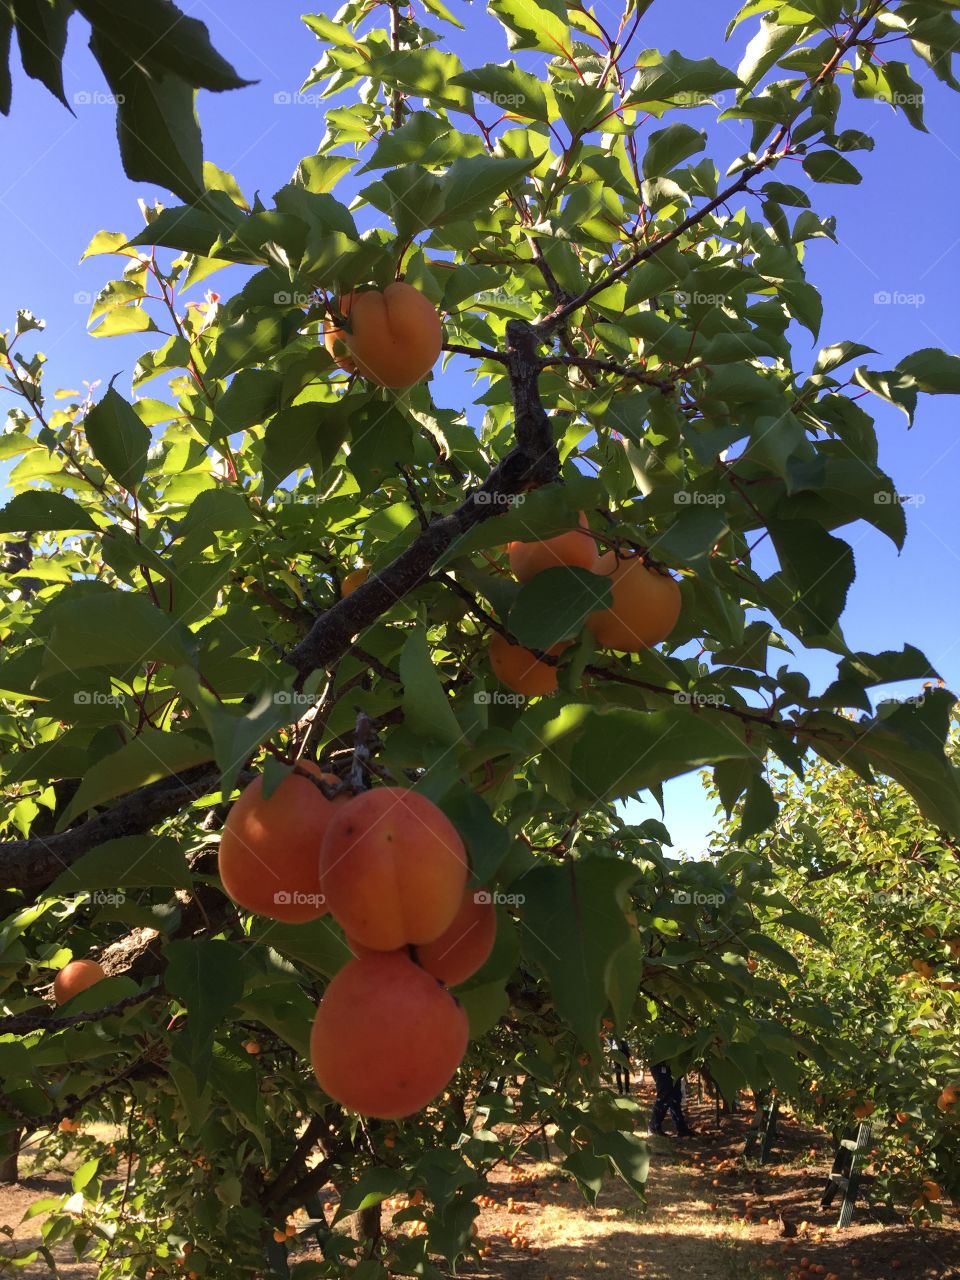 Apricots - Season of Harvesting 